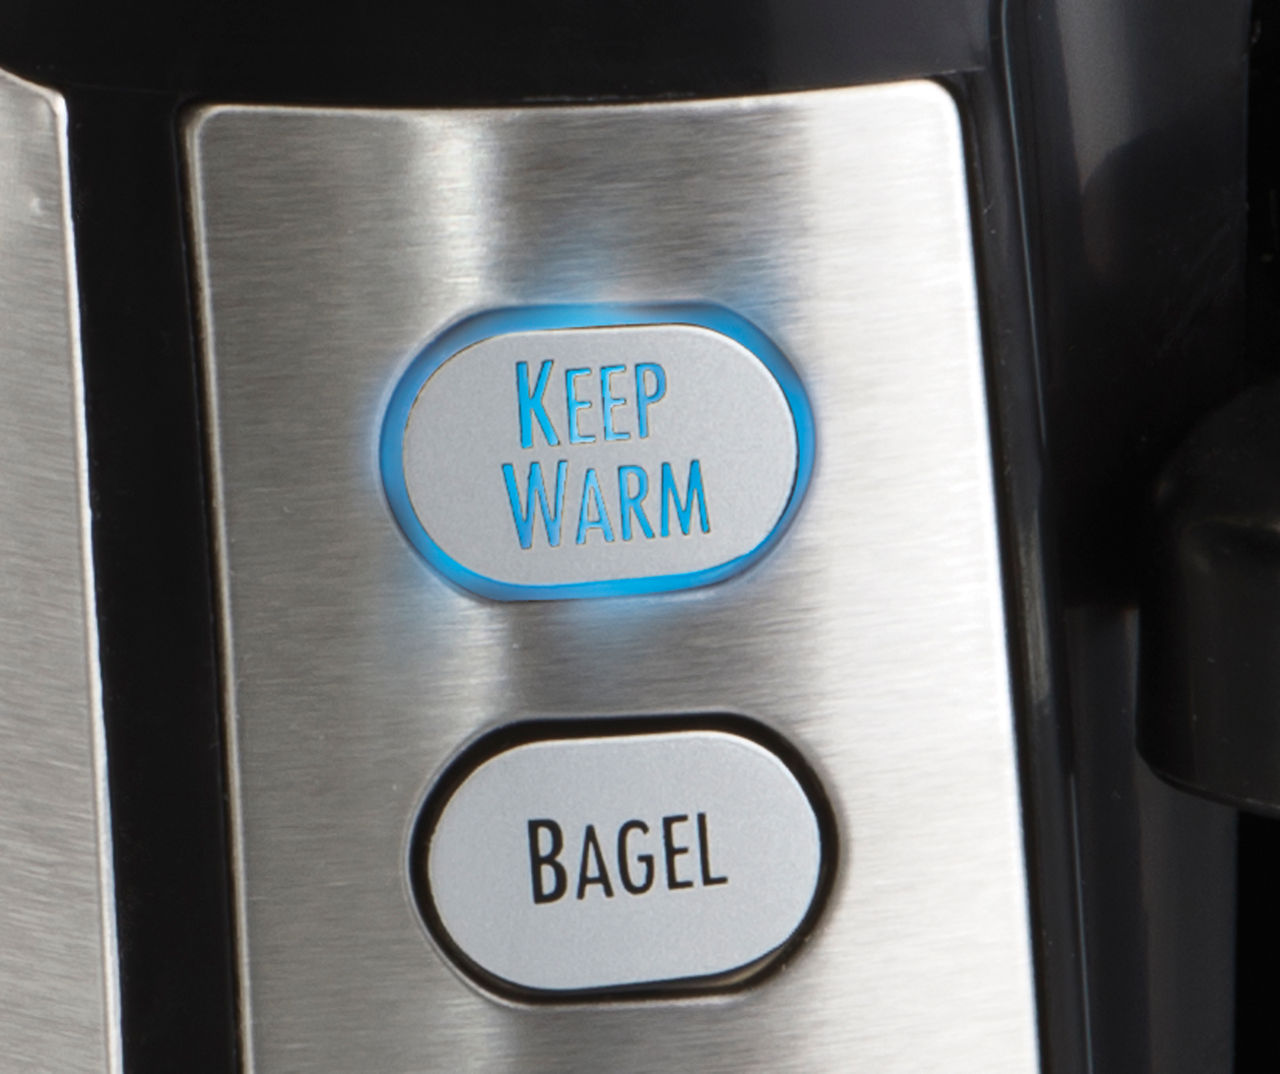 Hamilton Beach Keep Warm 4-Slice Long Slot Toaster